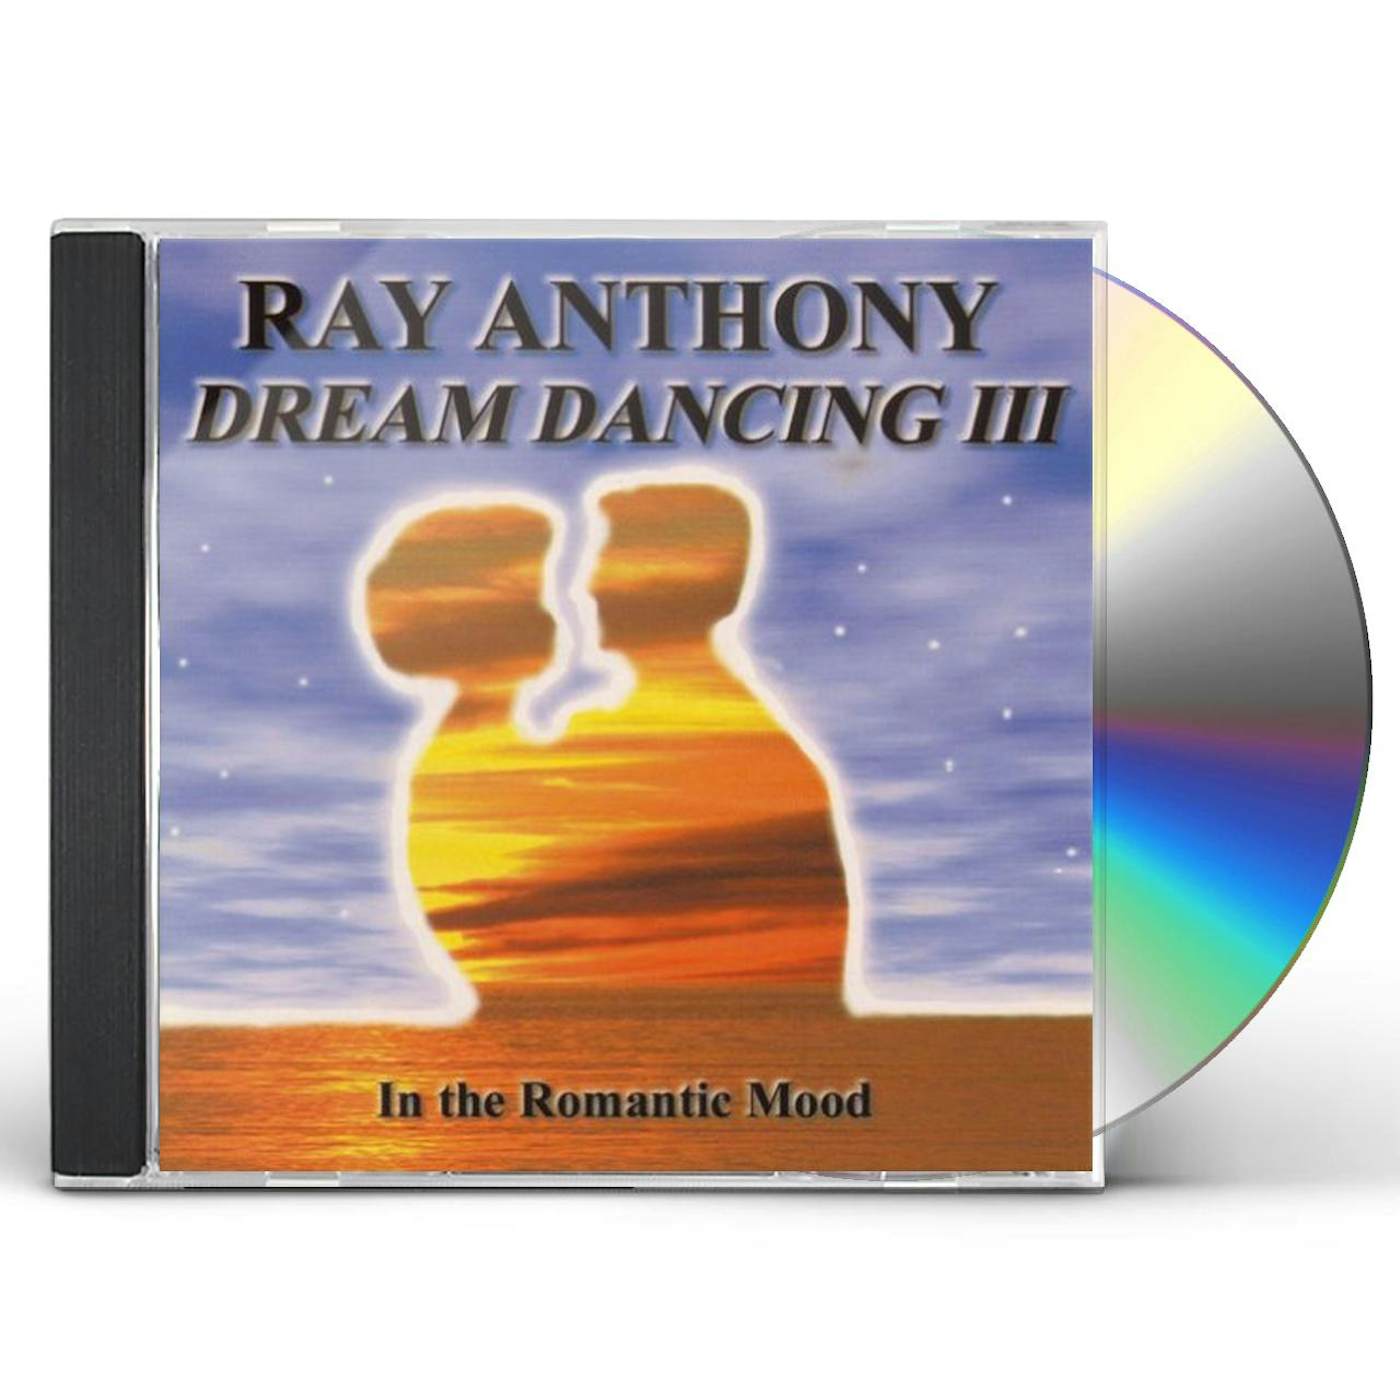 Ray Anthony ROMANTIC MOOD: DREAM DANCING III CD